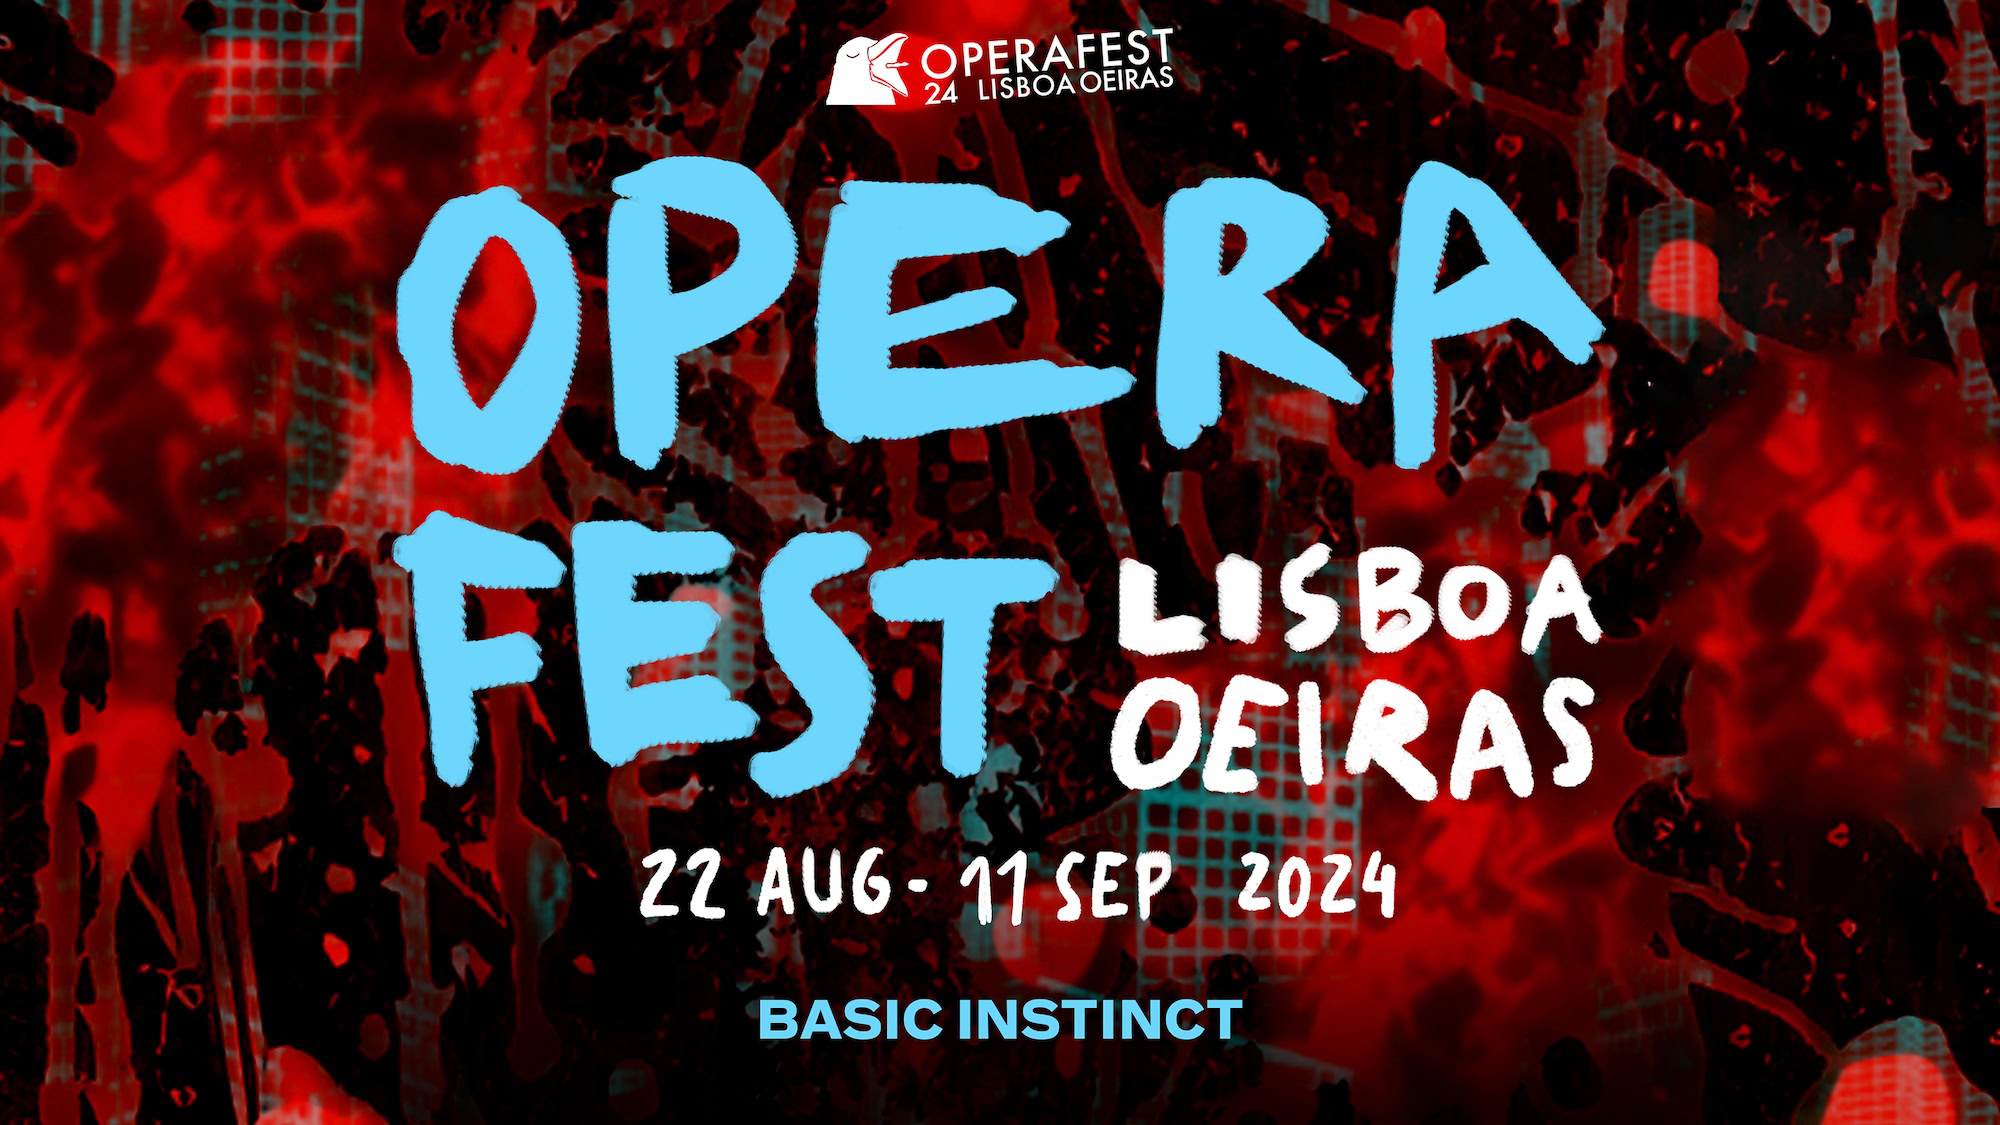 Lisboa-Operafest-2024